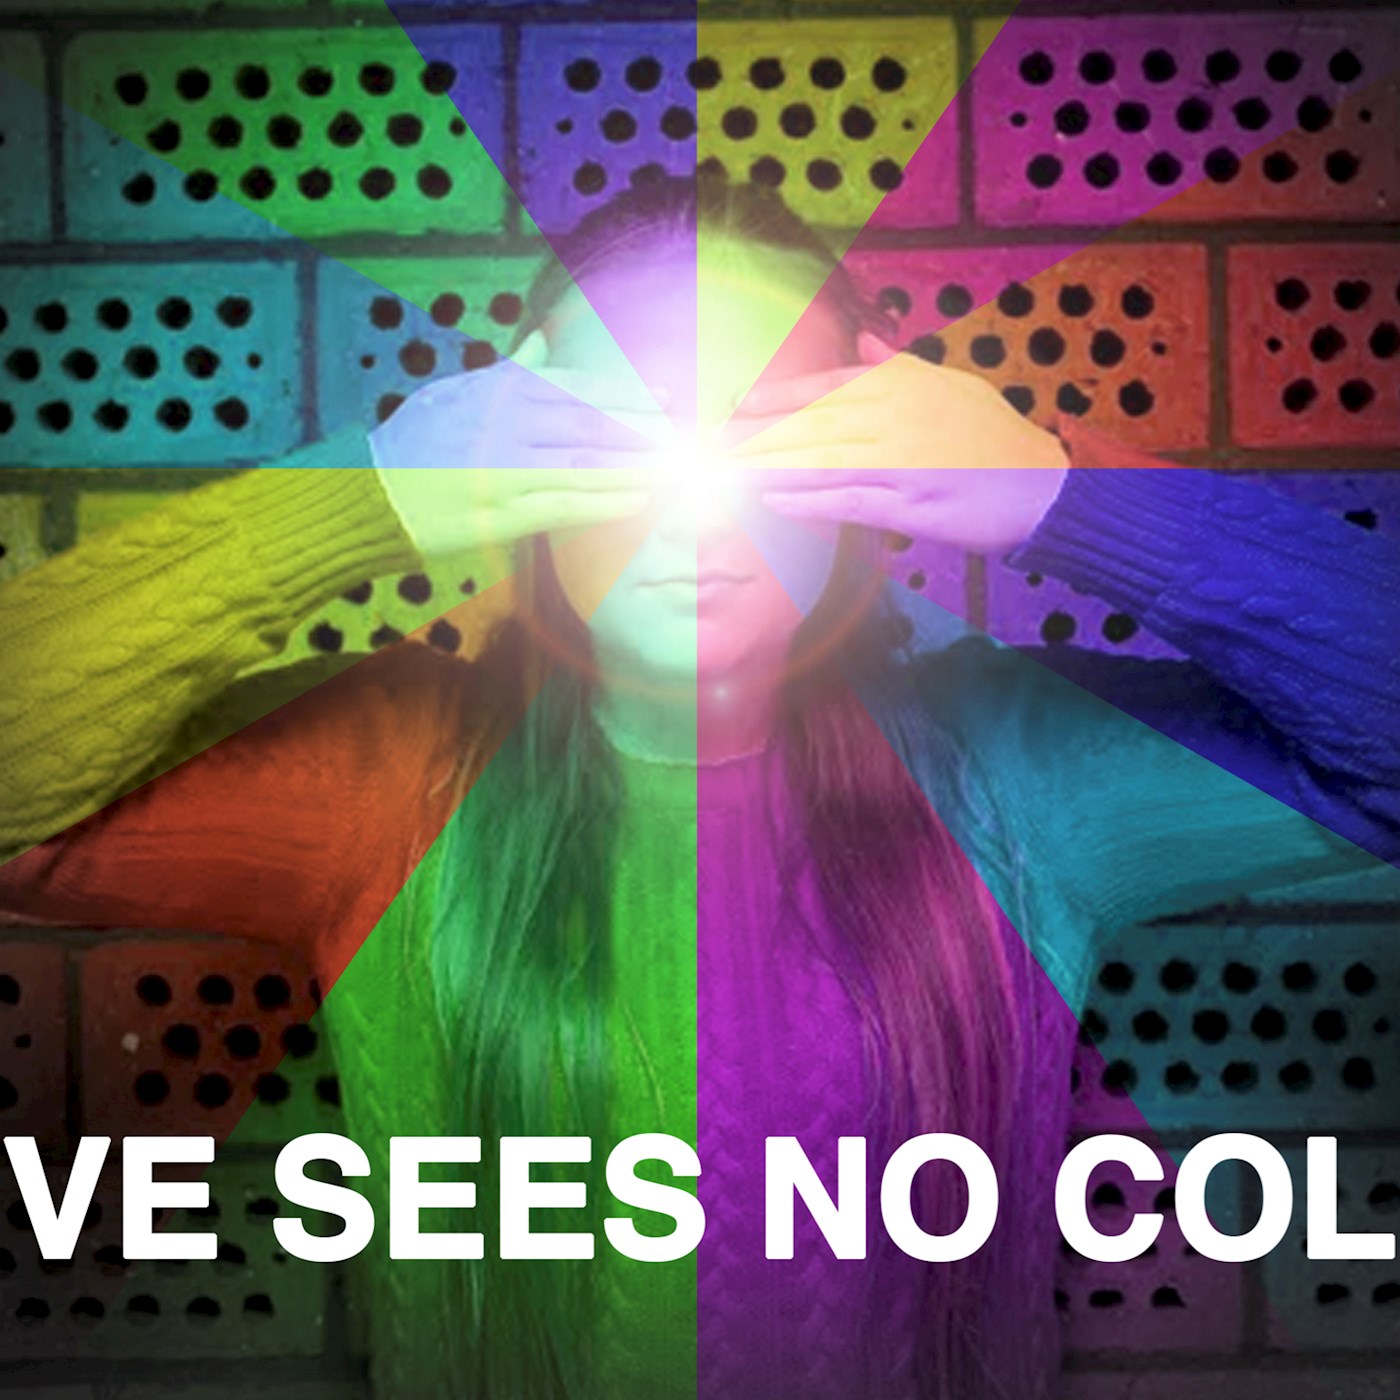 Love Sees No Color